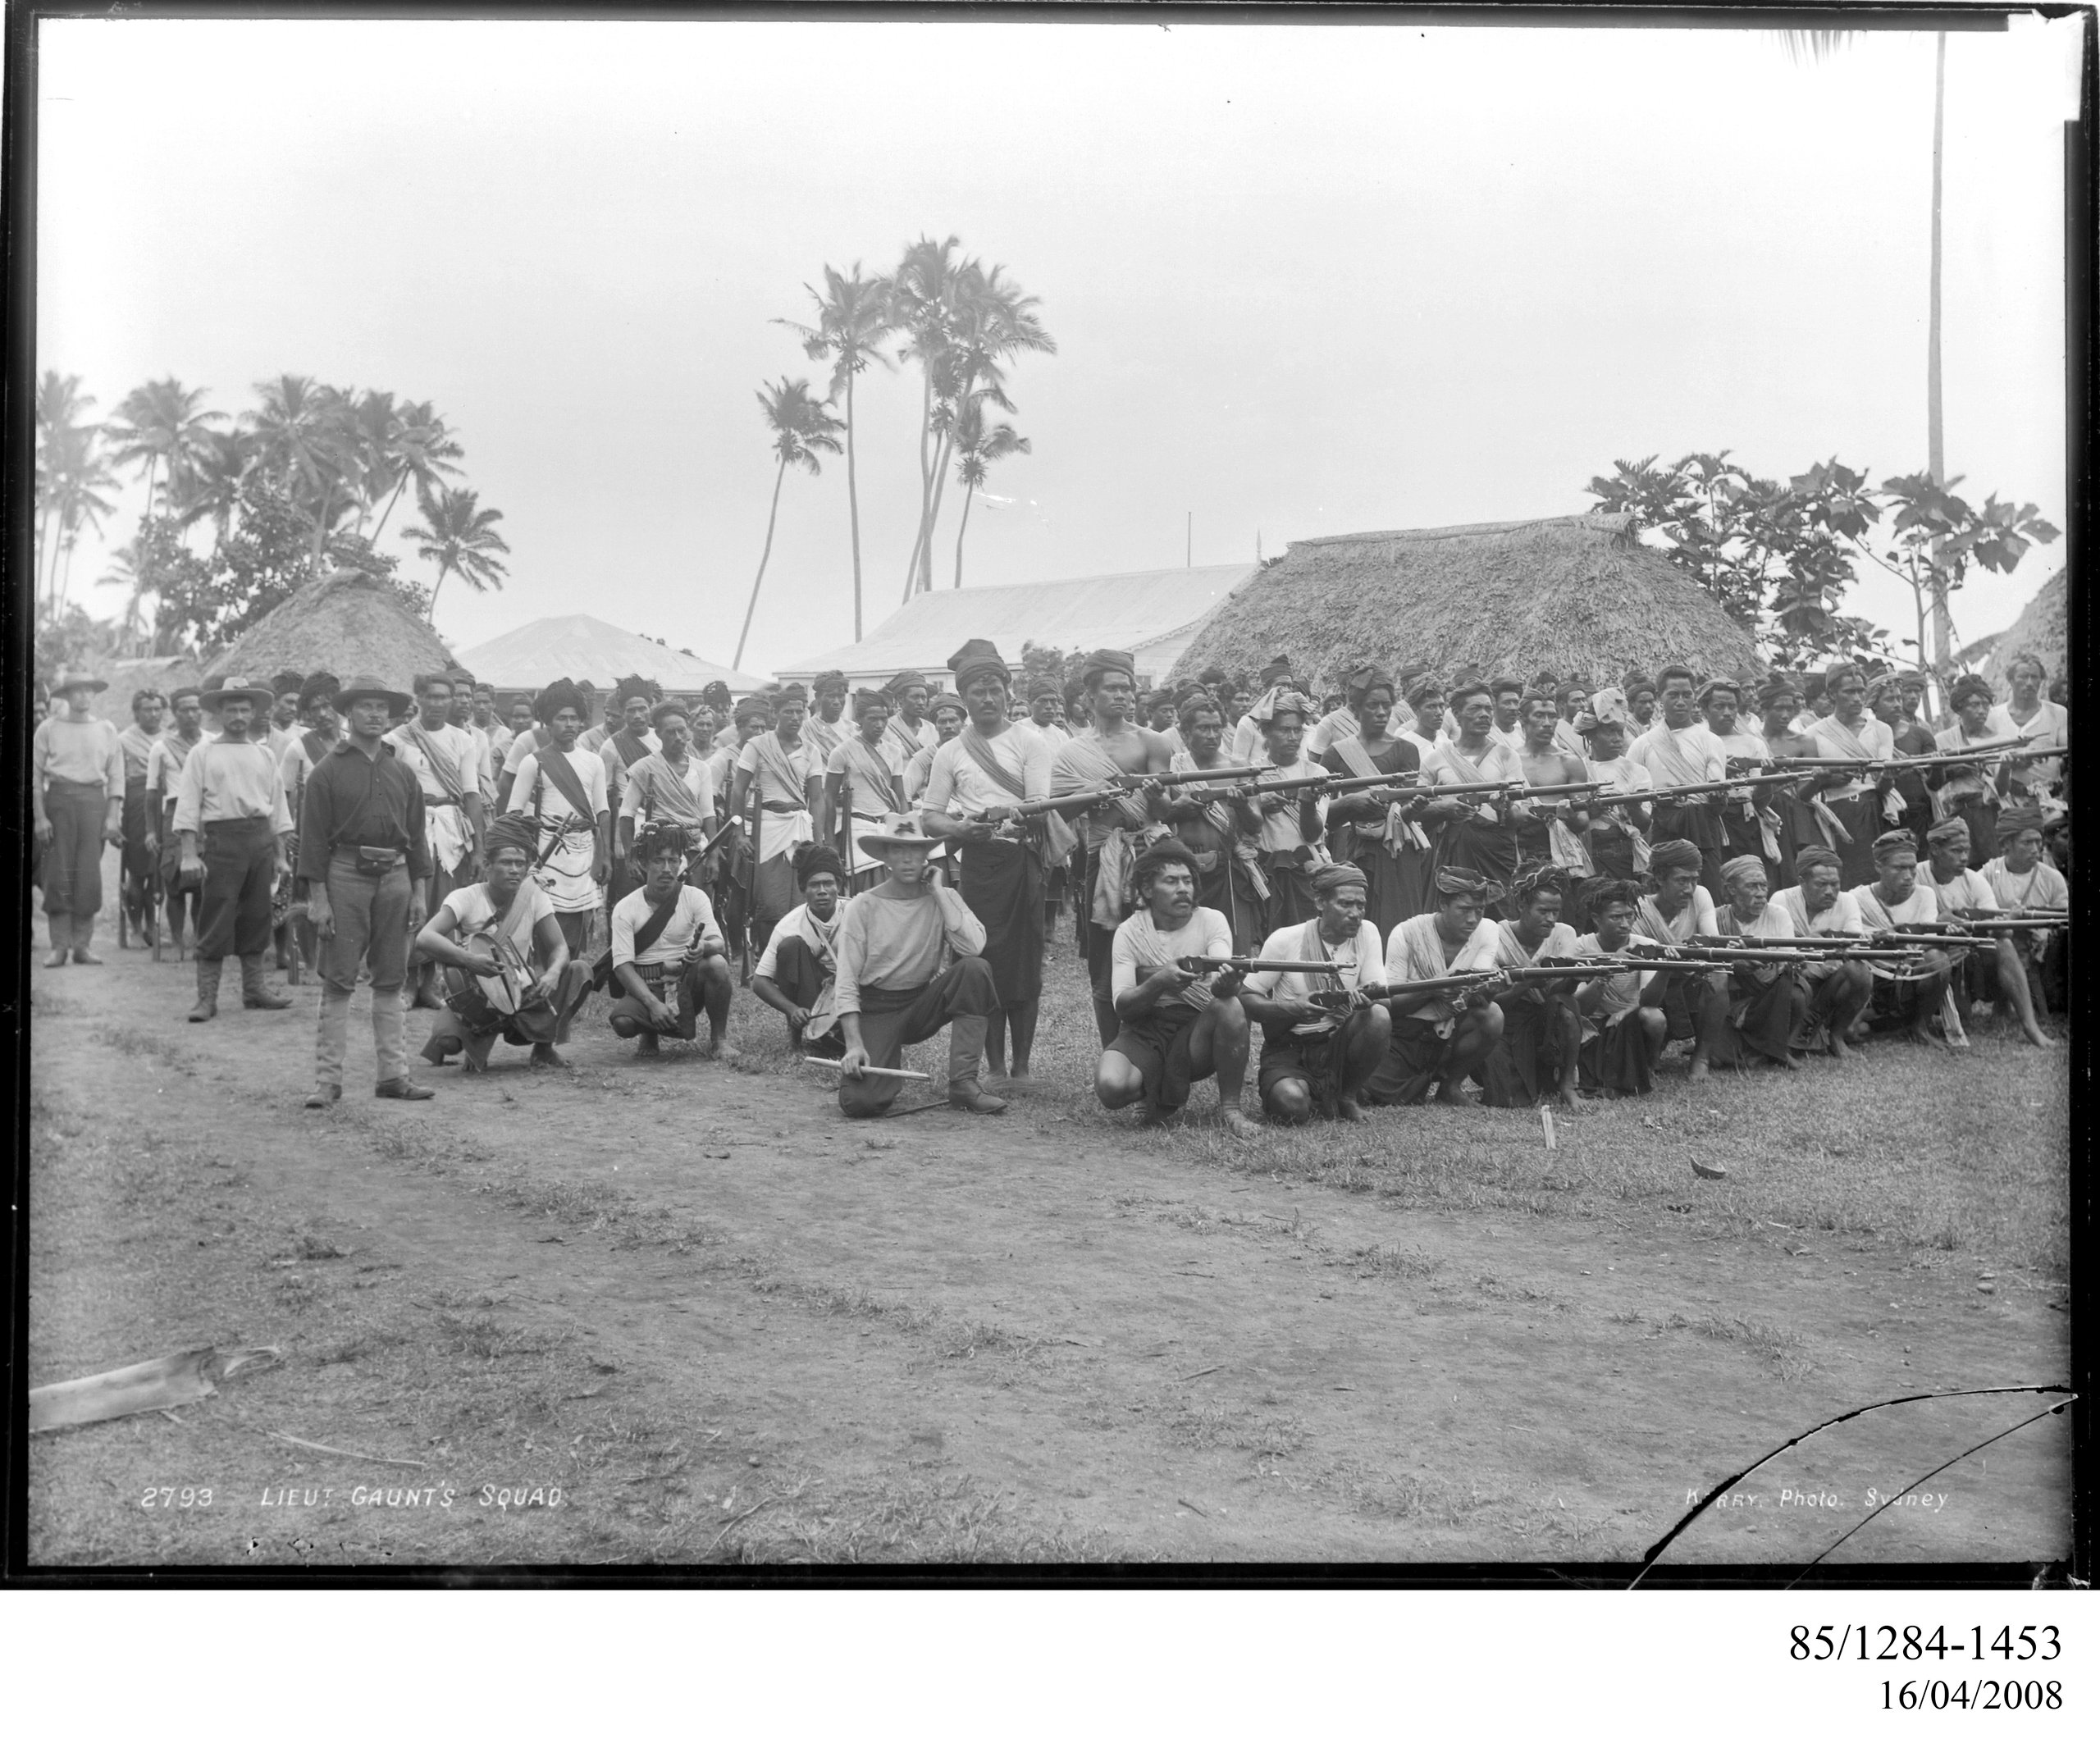 Lieutenant Gaunt, sailors and some of Malietoa's supporters, Upolu, Samoa, 1899